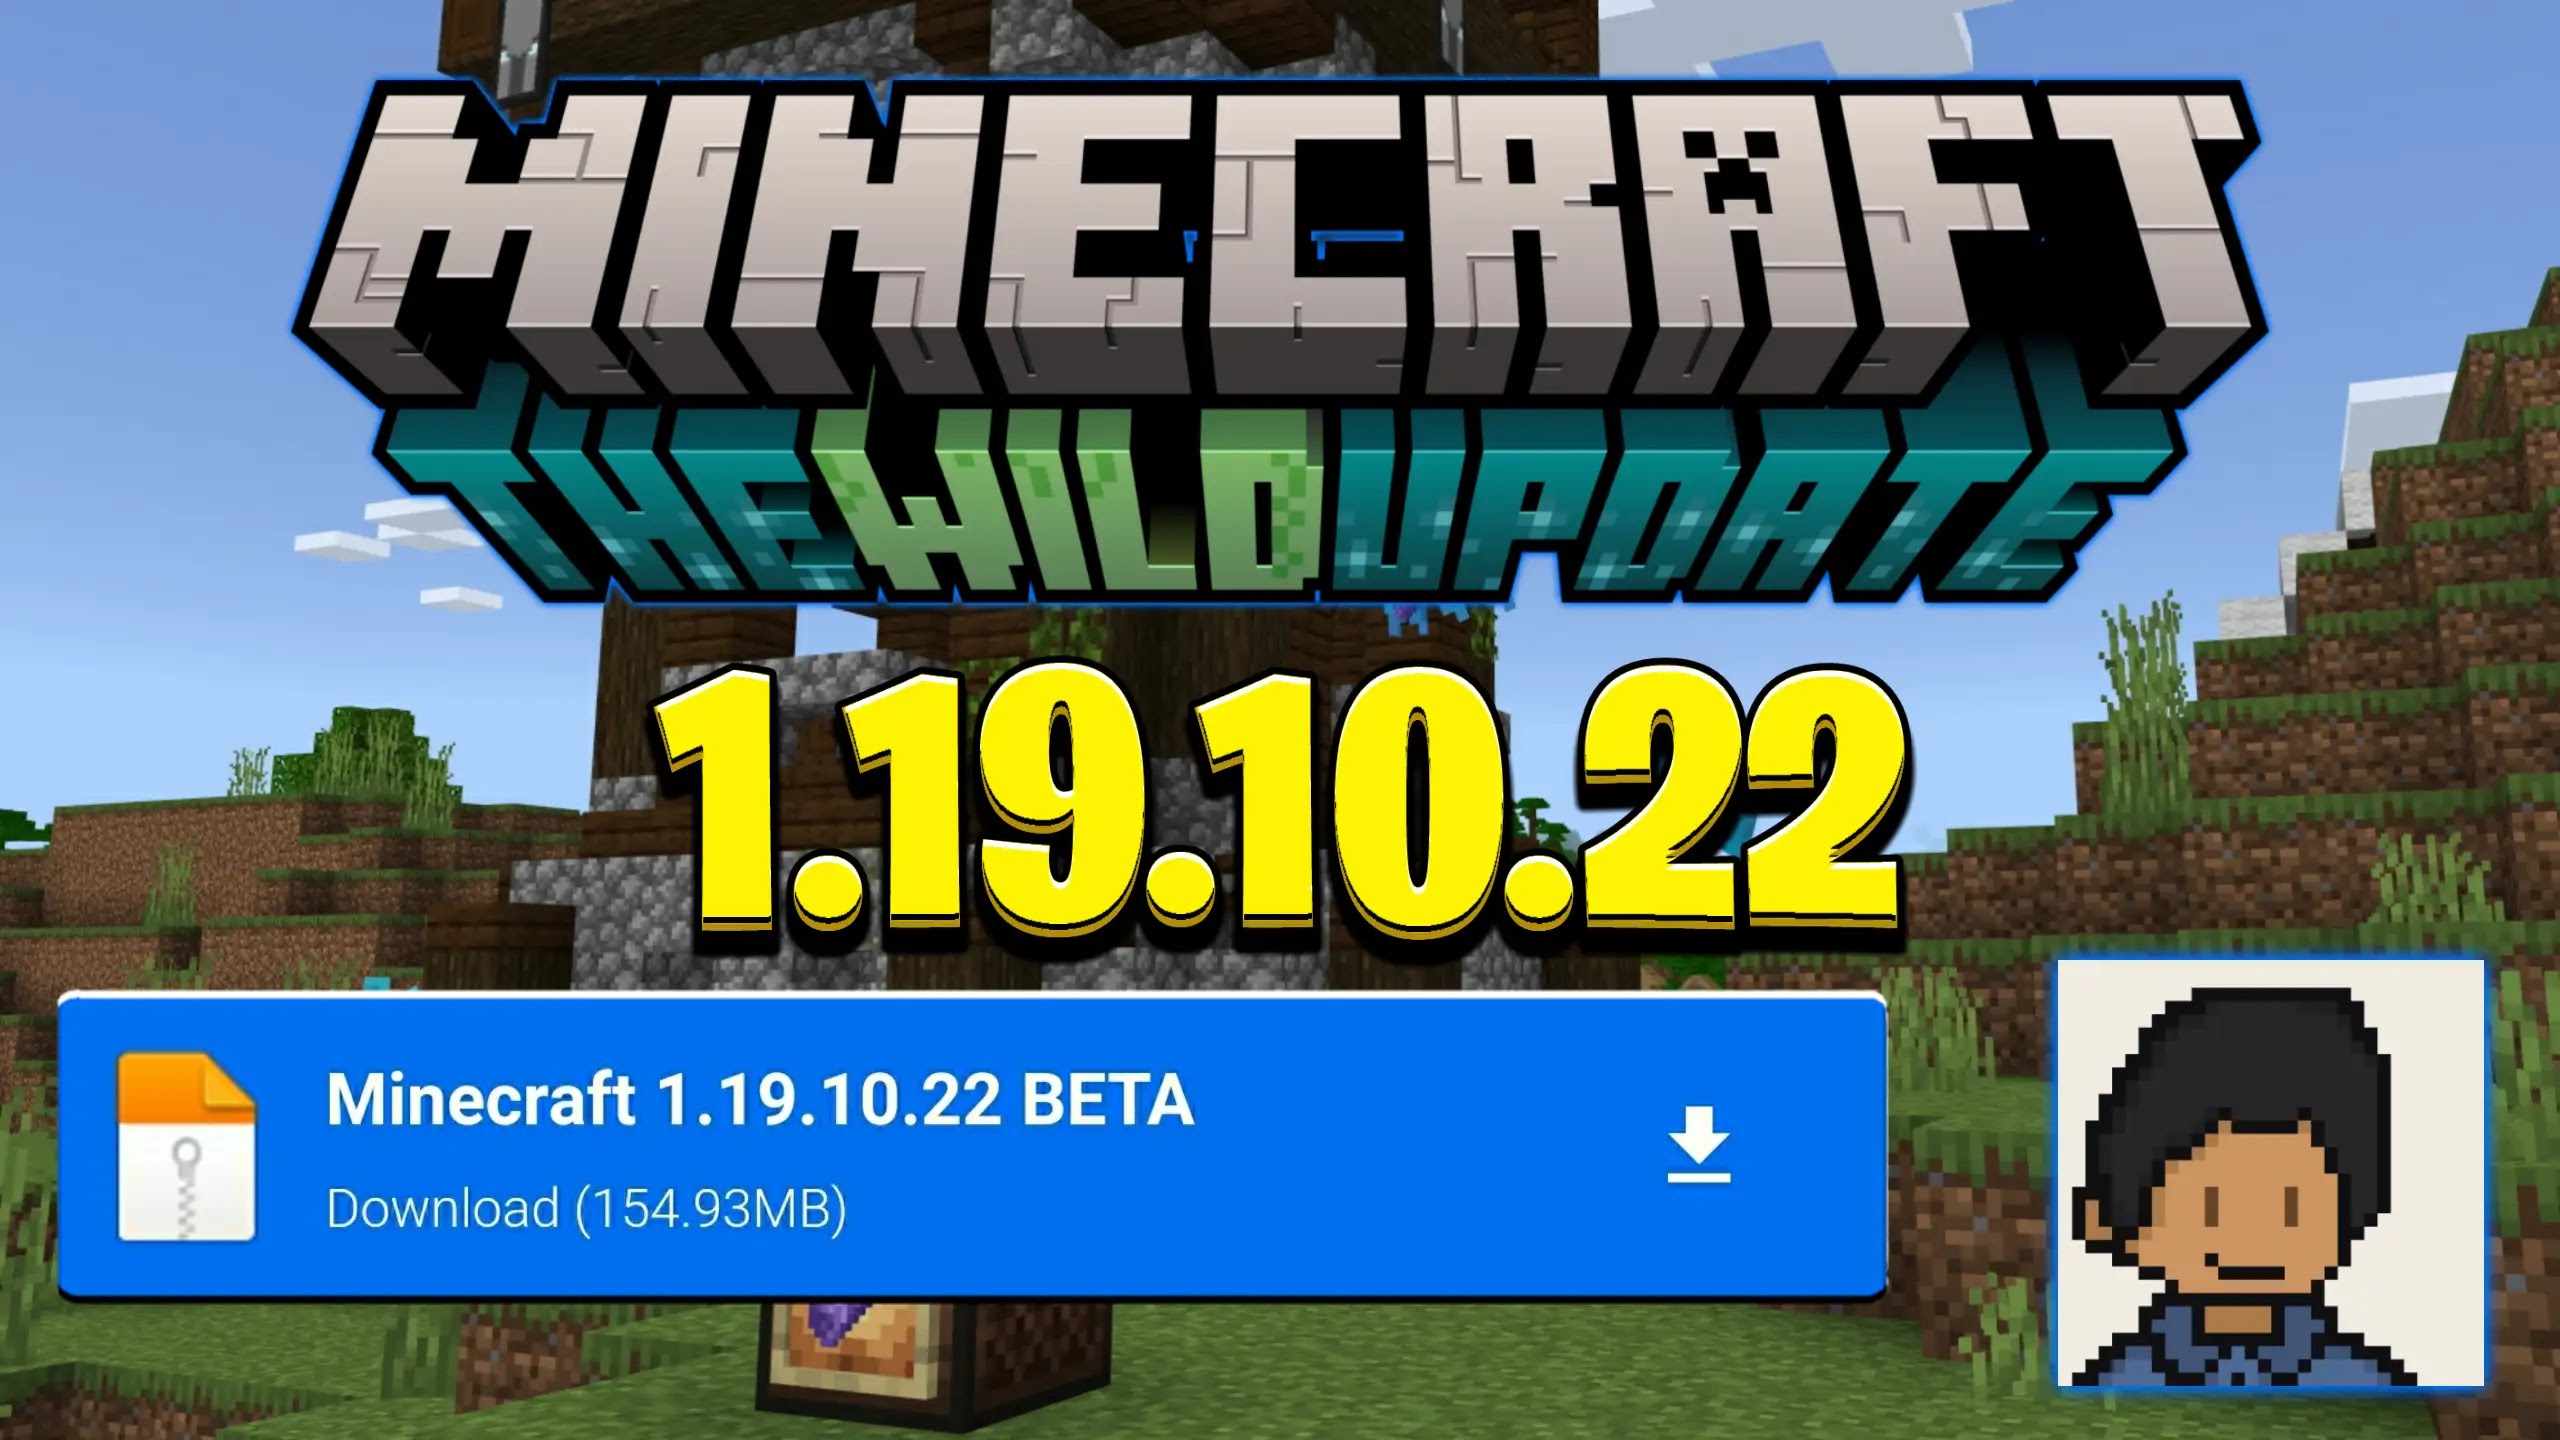 Minecraft PE 1.19.10.22 Apk Free Download